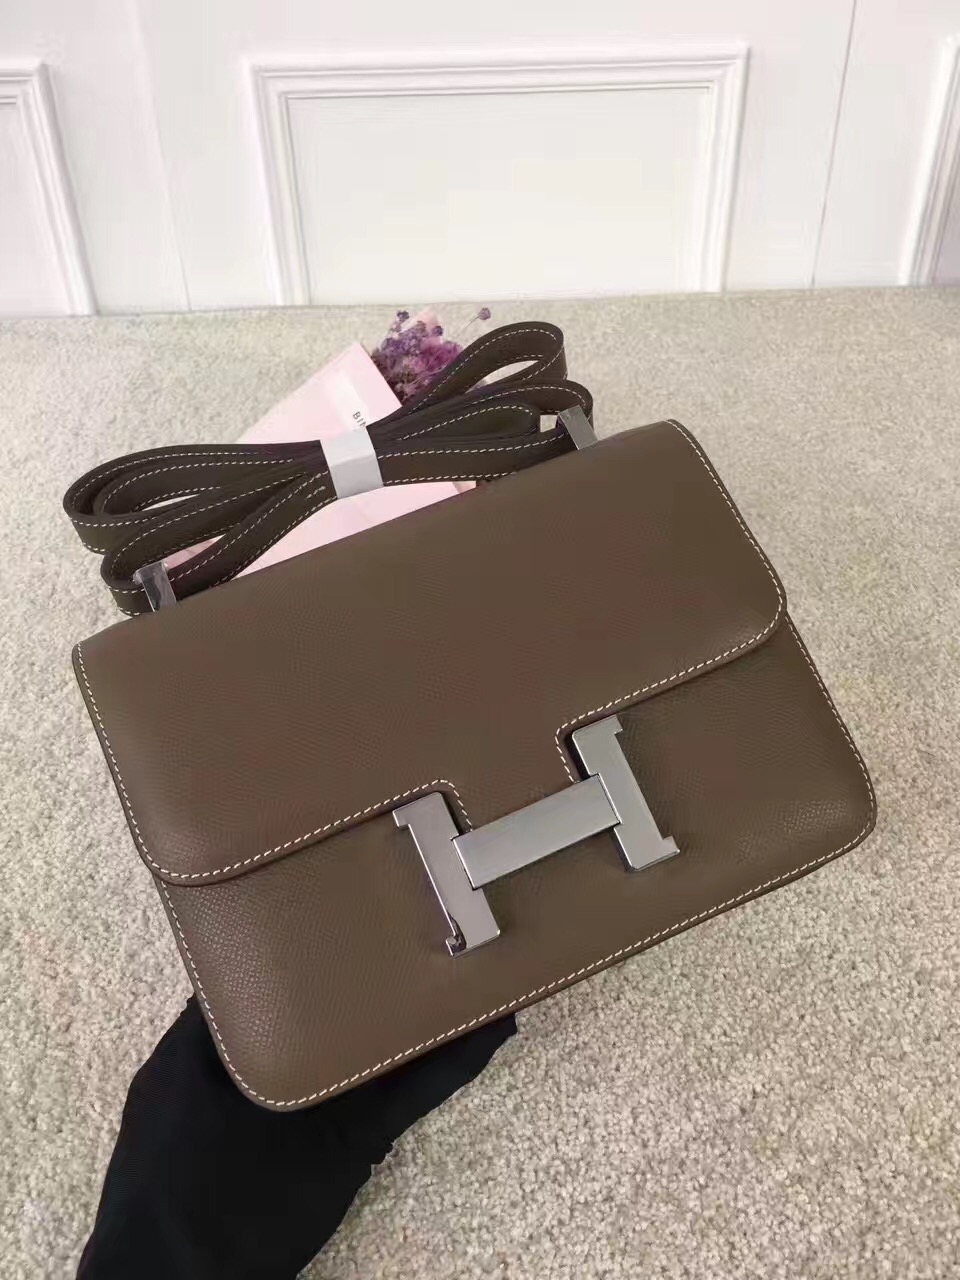 Hermes top leather Constance handbags